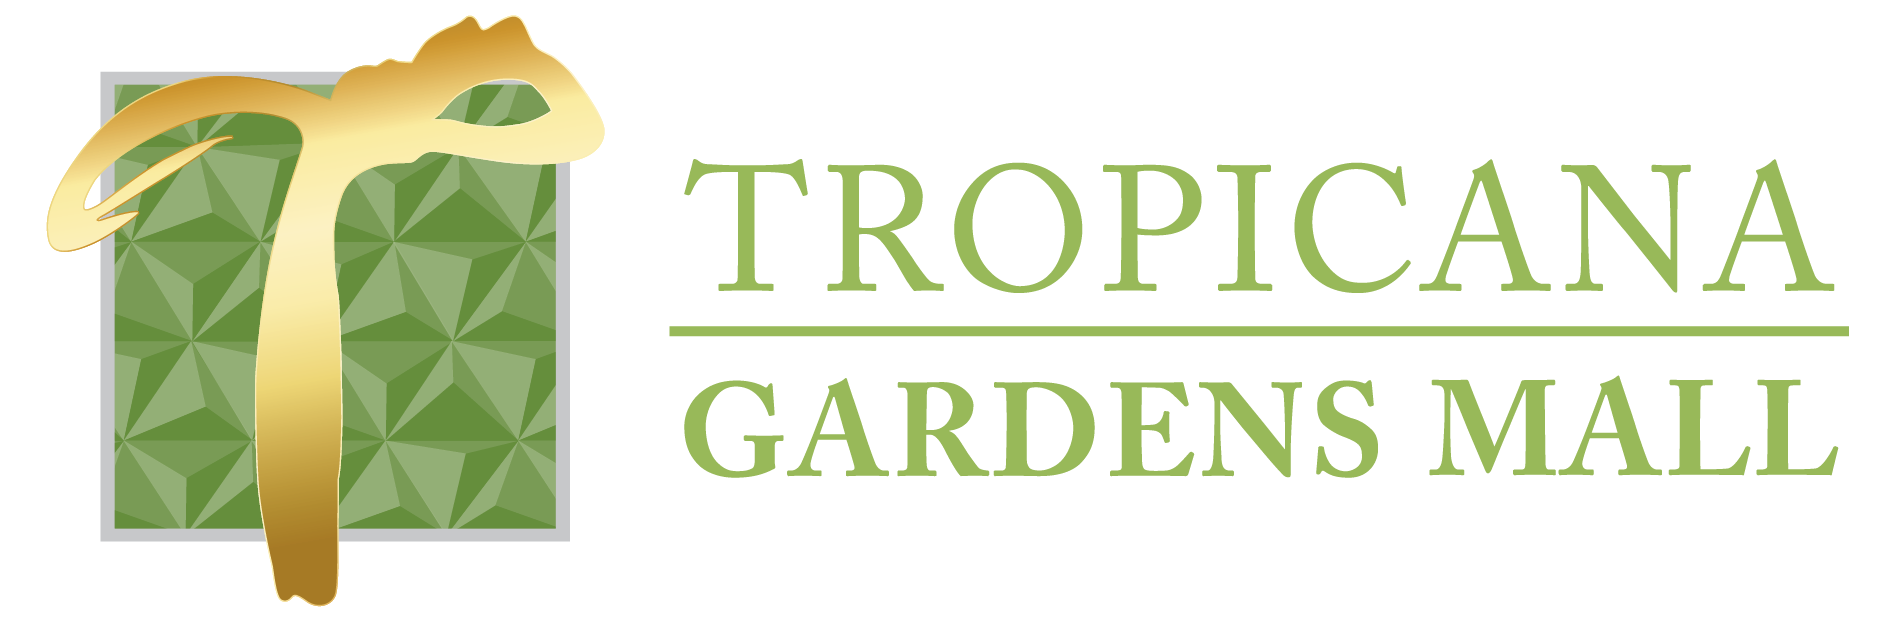 Tropicana Gardens Mall